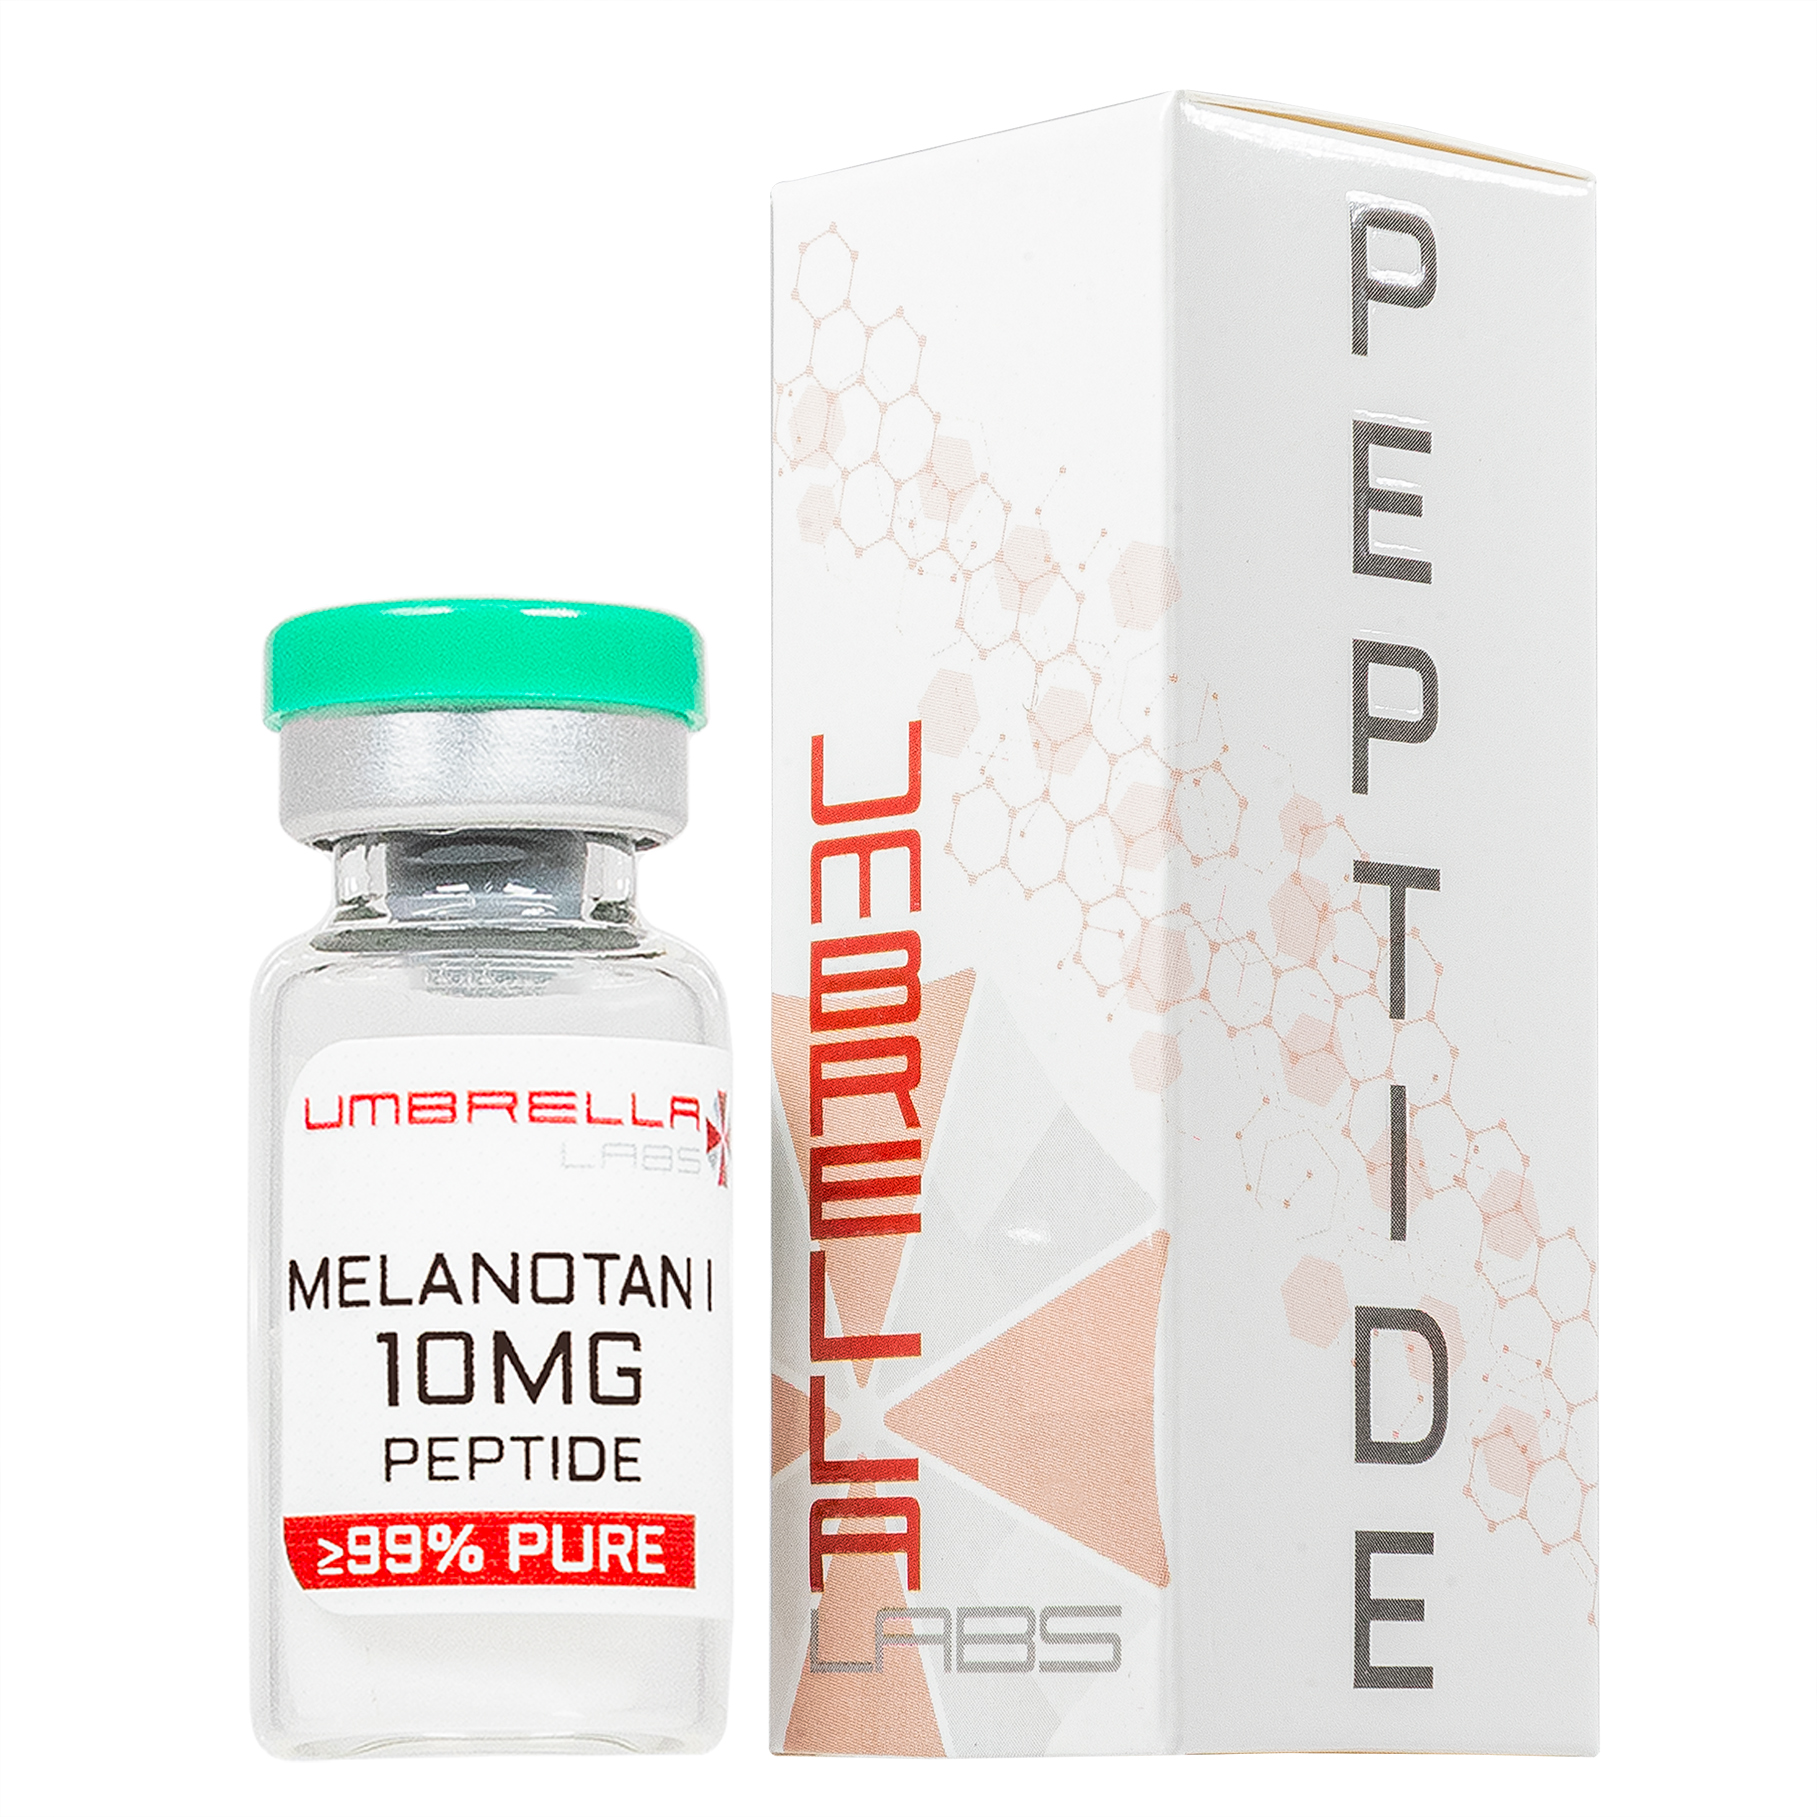 melanotan i peptide 10mg vial